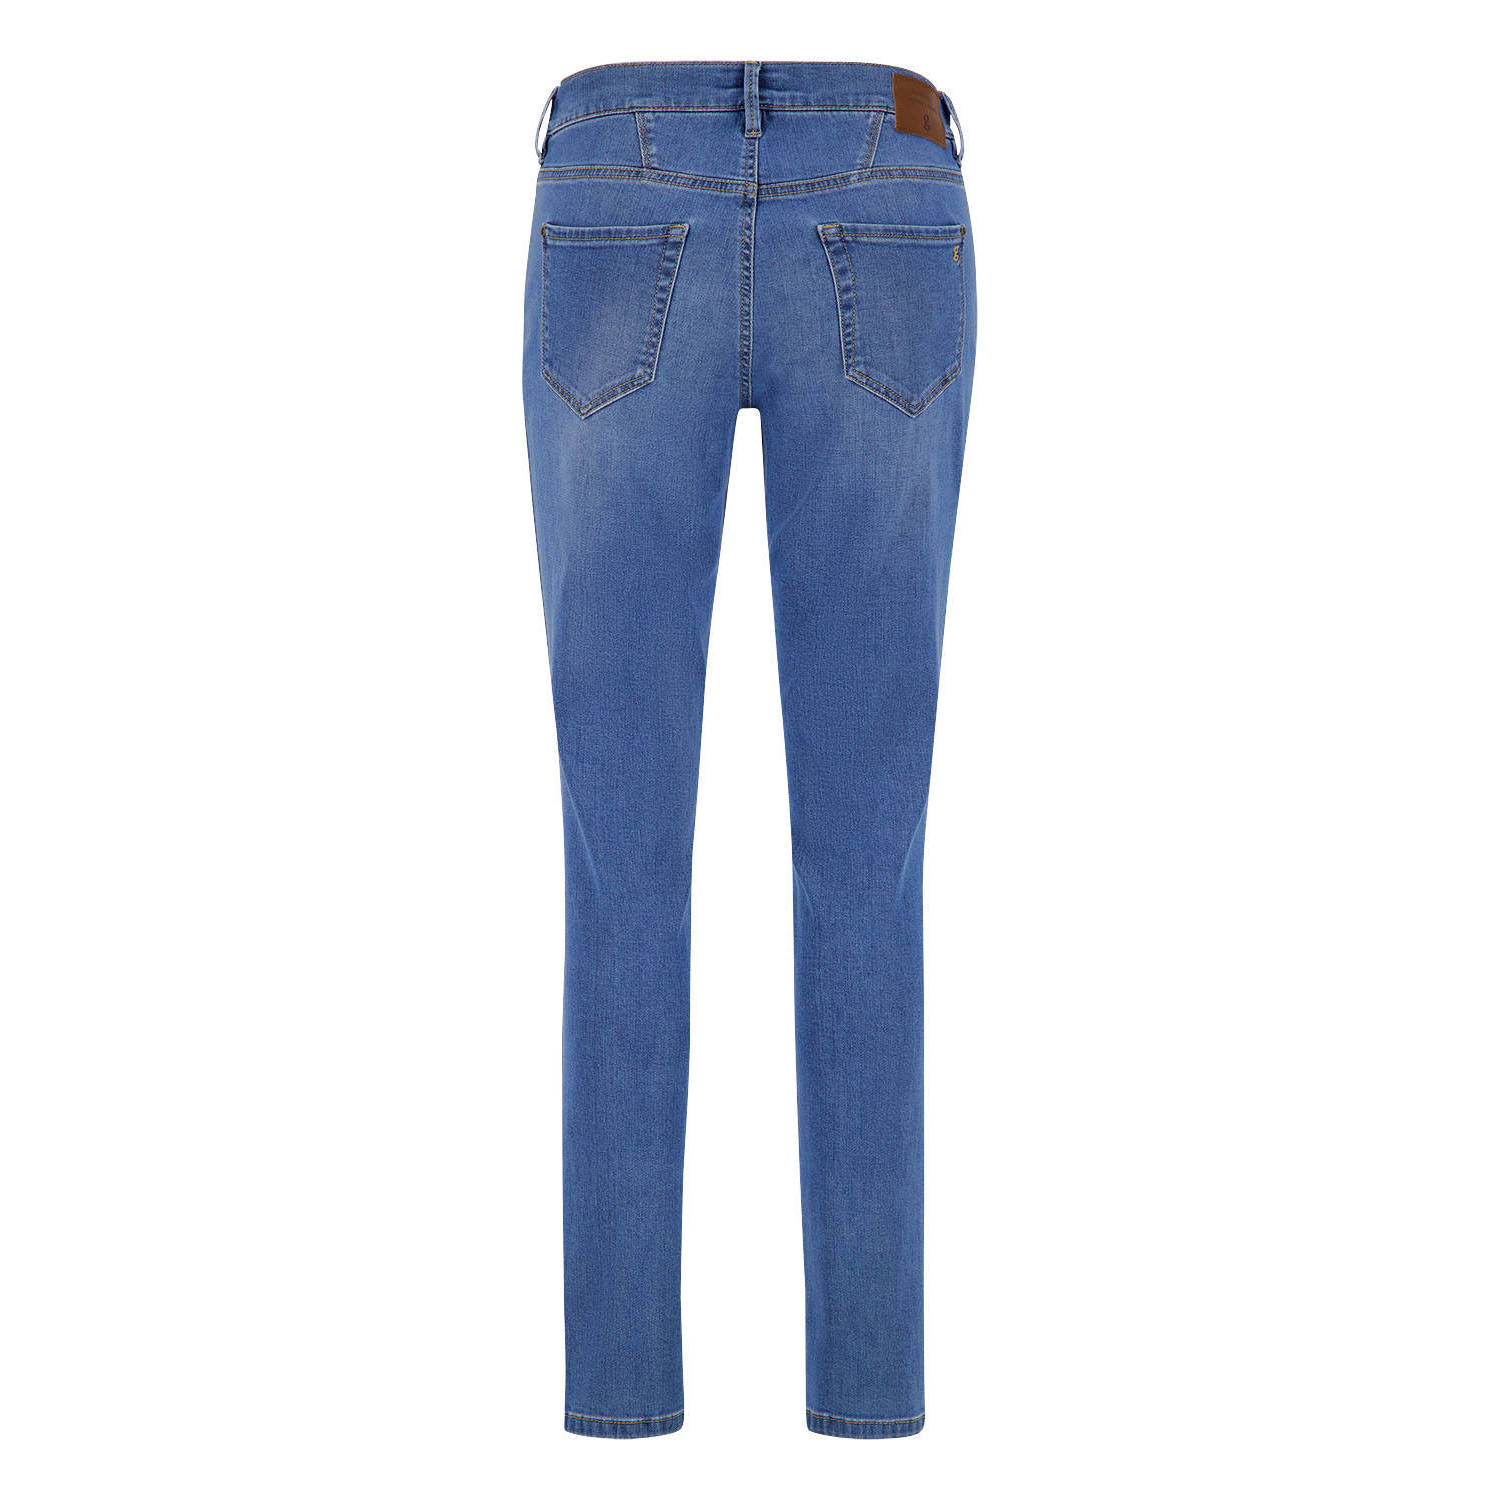 gardeur slim fit jeans Zuri216 light blue denim